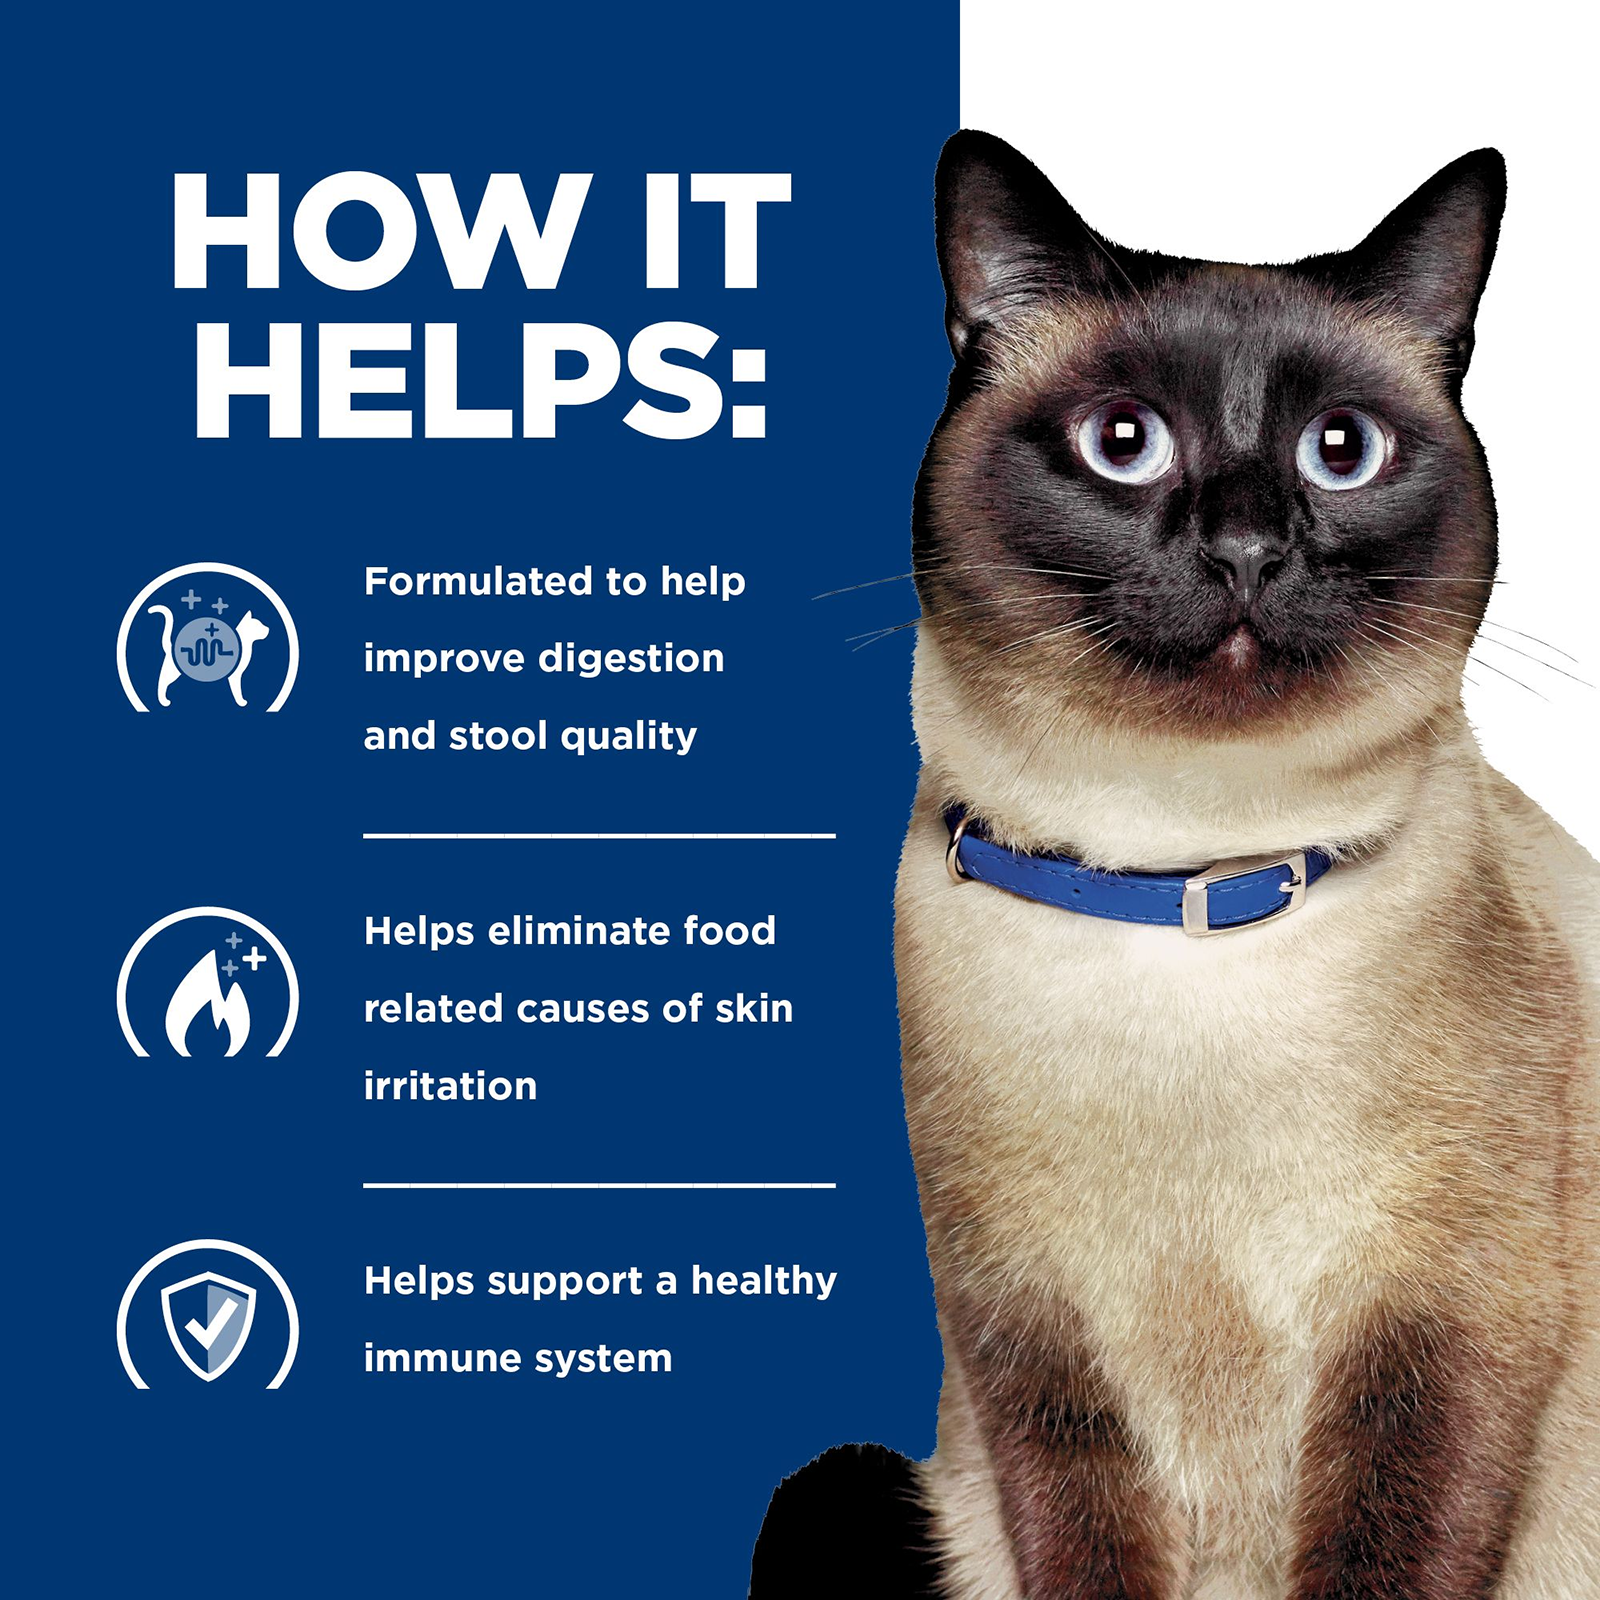 Hill's Prescription Diet Cat Food Can z/d Skin/Food Sensitivities